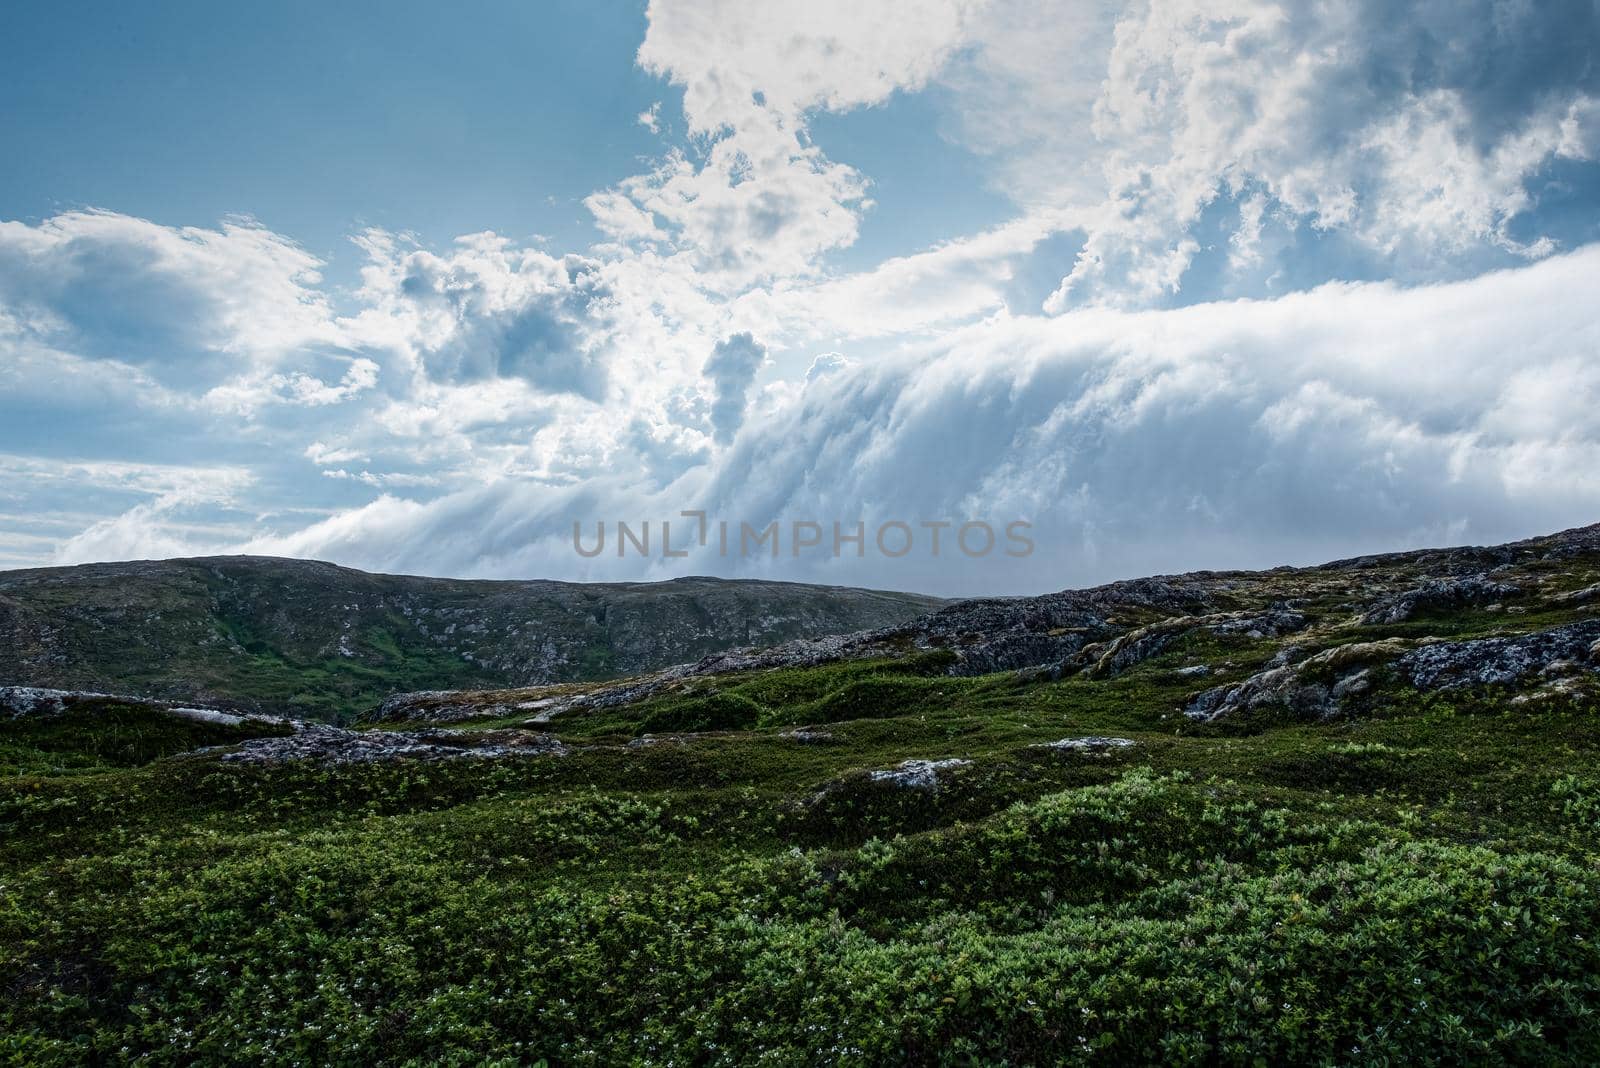 Dramatic Labrador Landscape and Sky near Battle Harbor